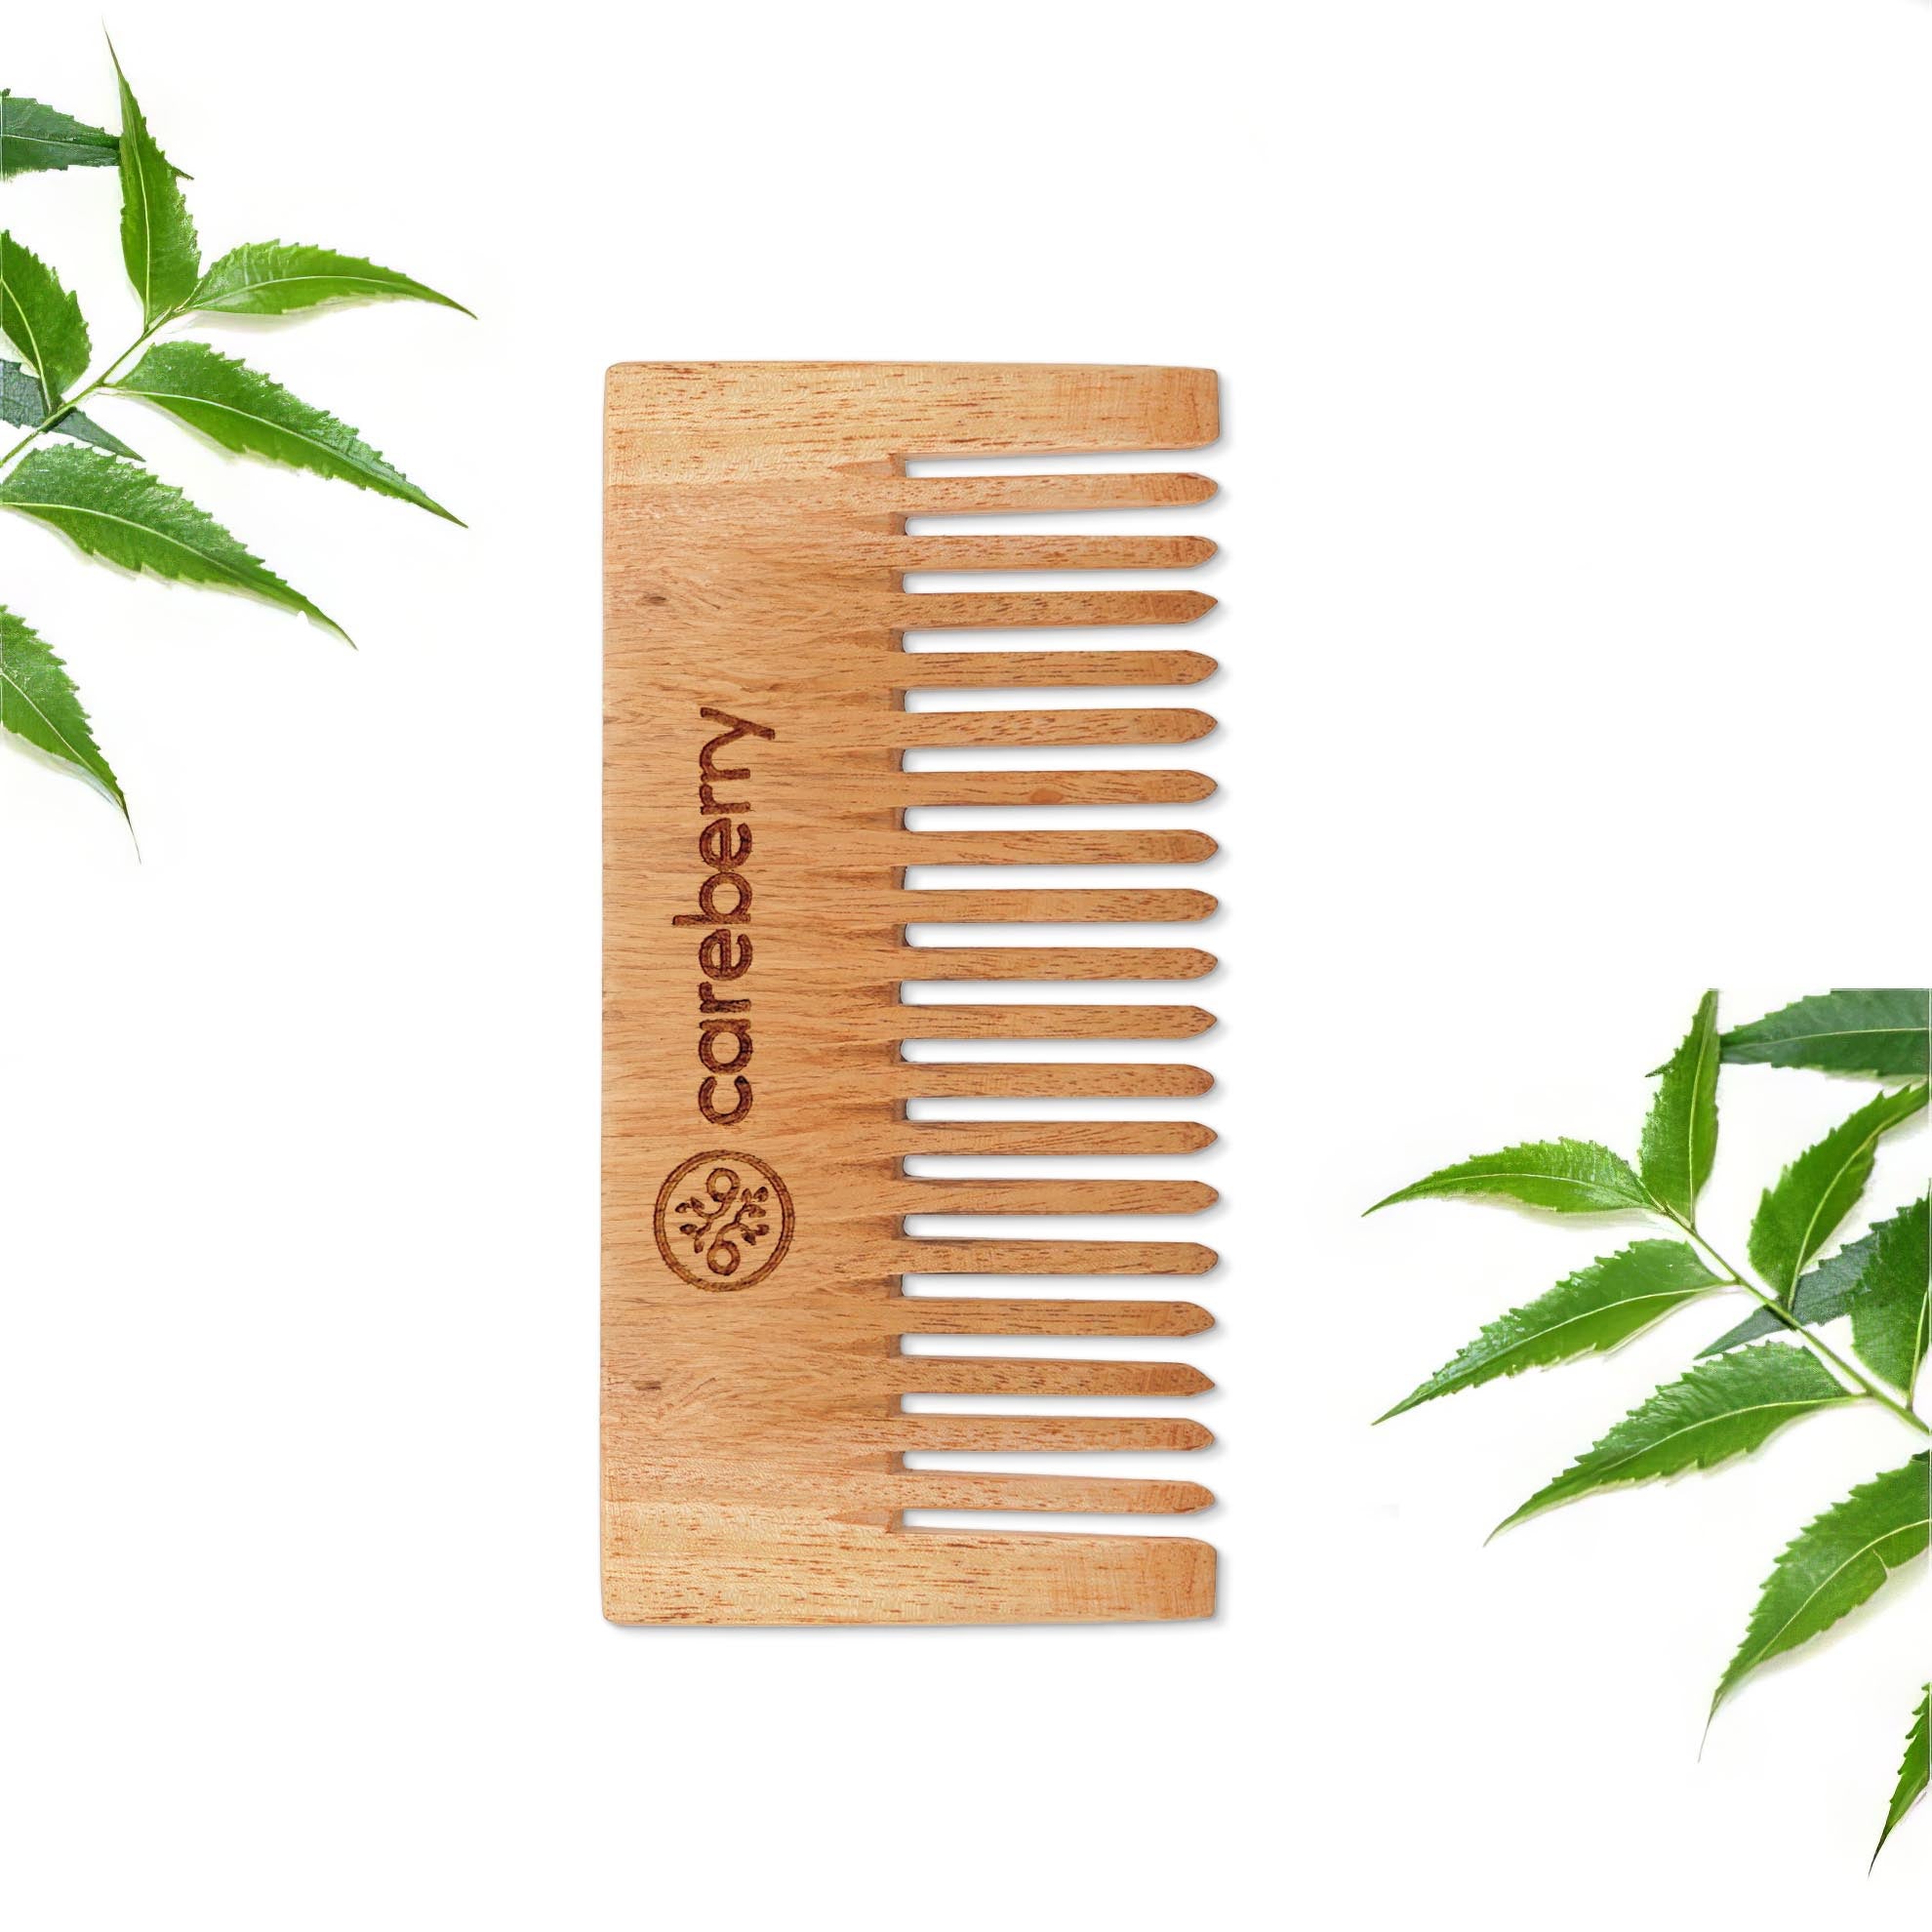  Careberry's Neem wooden Comb 